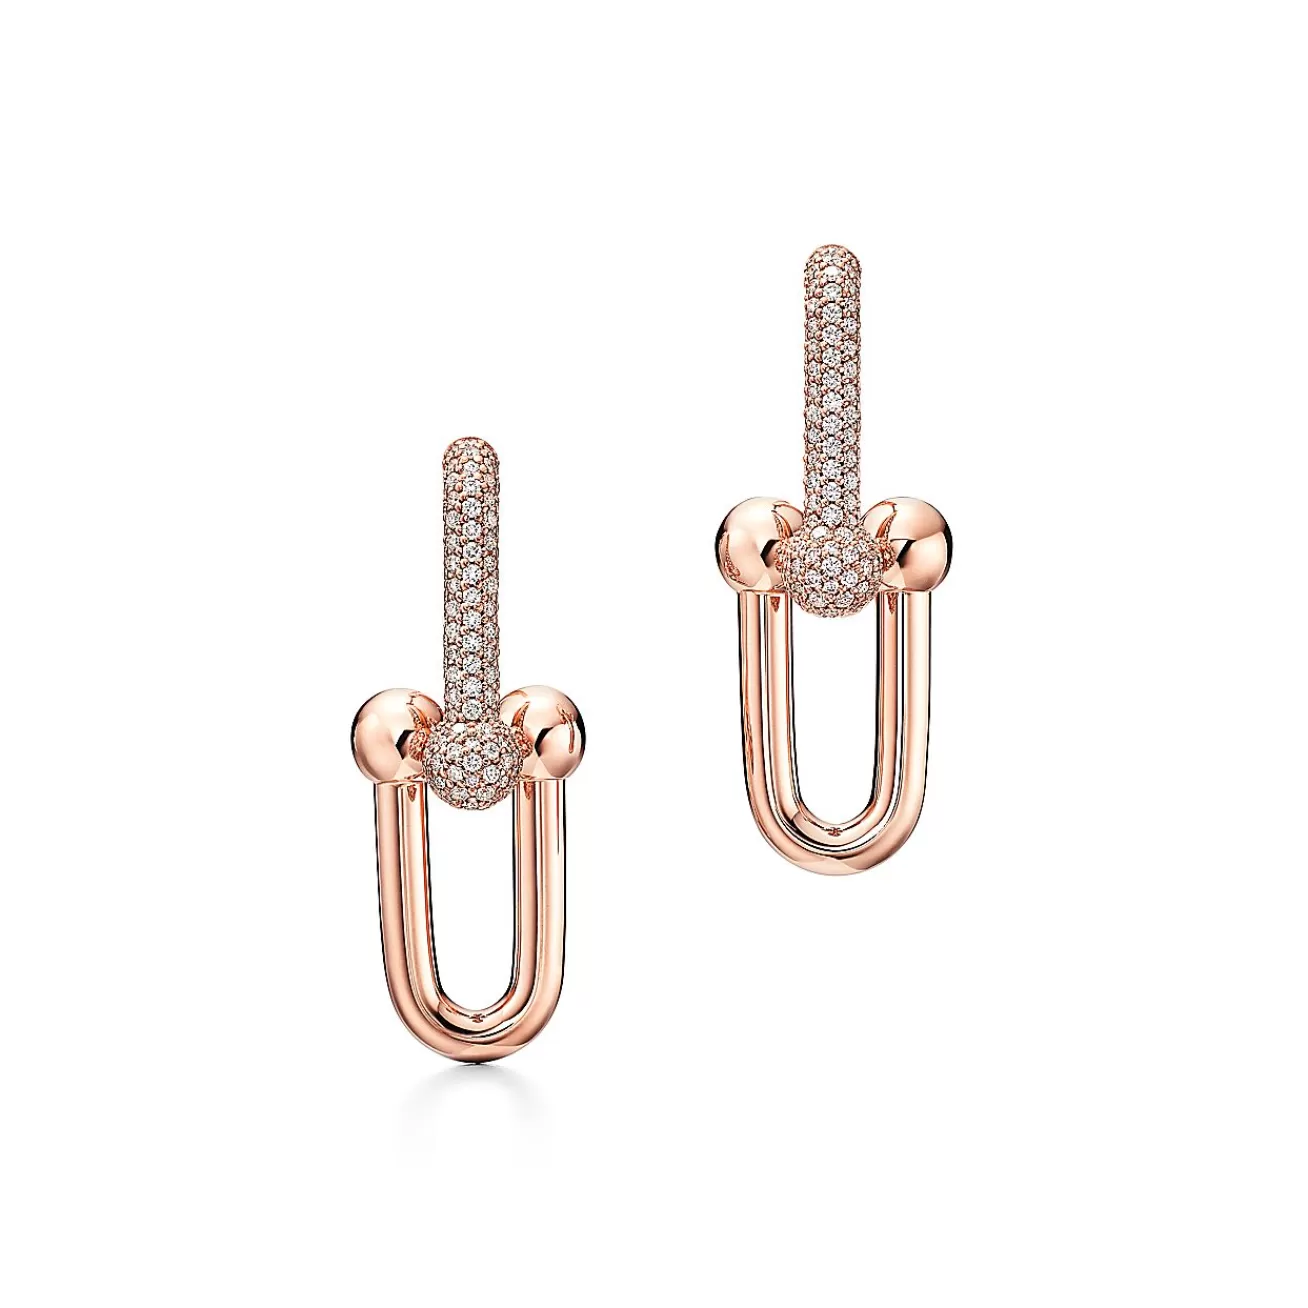 Tiffany & Co. Tiffany HardWear Large Link Earrings in Rose Gold with Pavé Diamonds | ^ Earrings | Rose Gold Jewelry